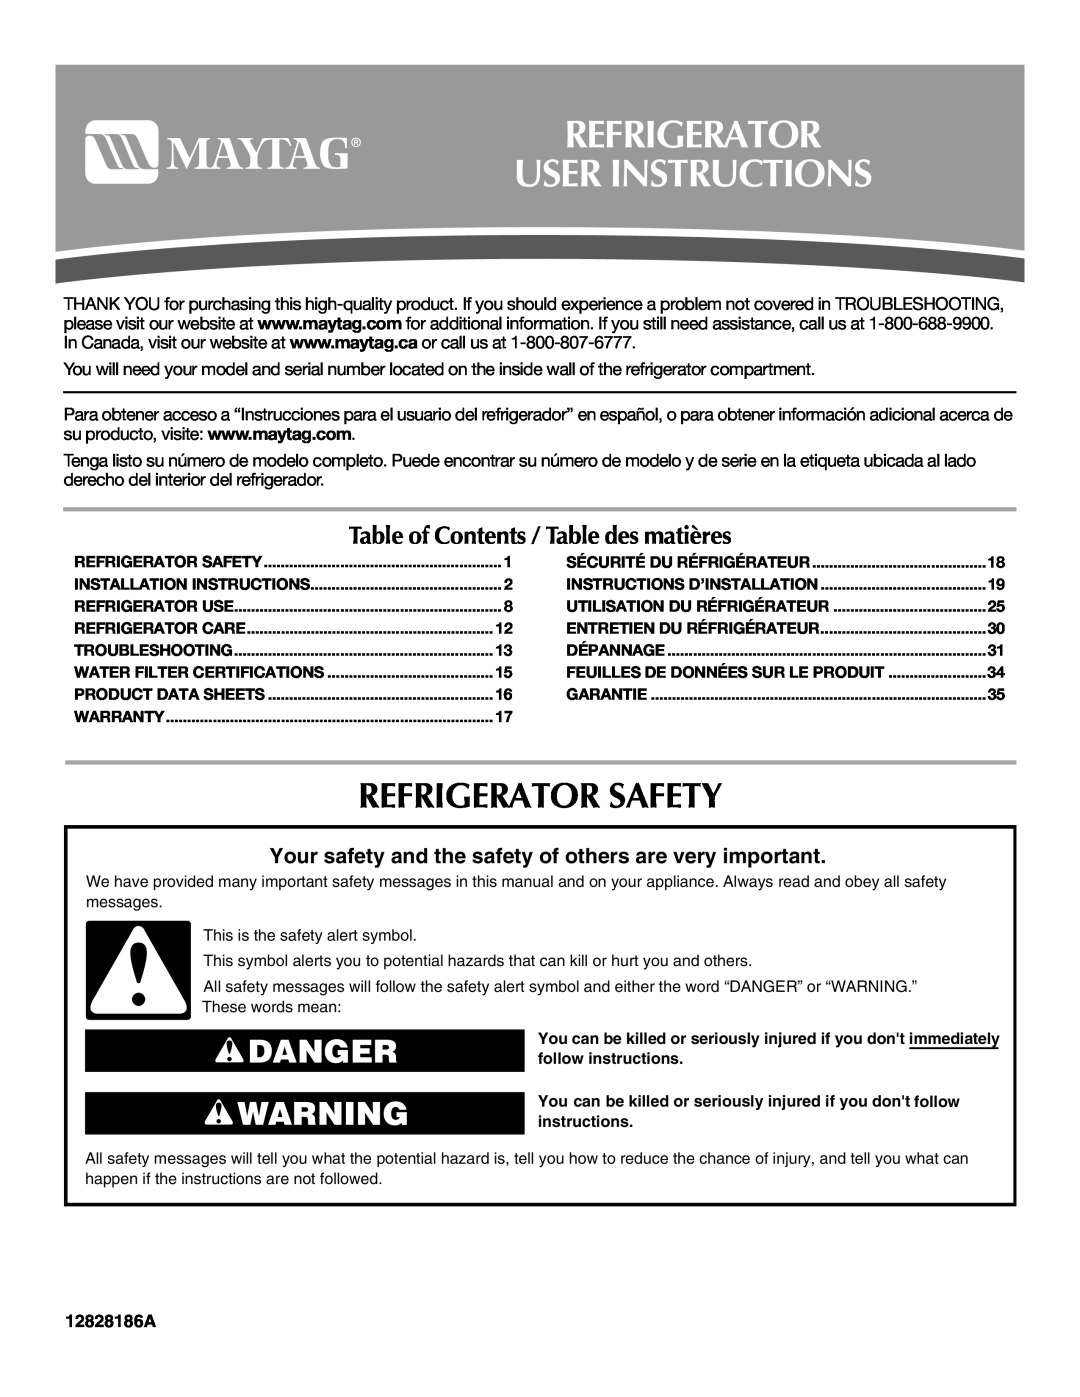 Maytag 12828186A, 12828190A installation instructions Refrigerator User Instructions, Refrigerator Safety, Danger 